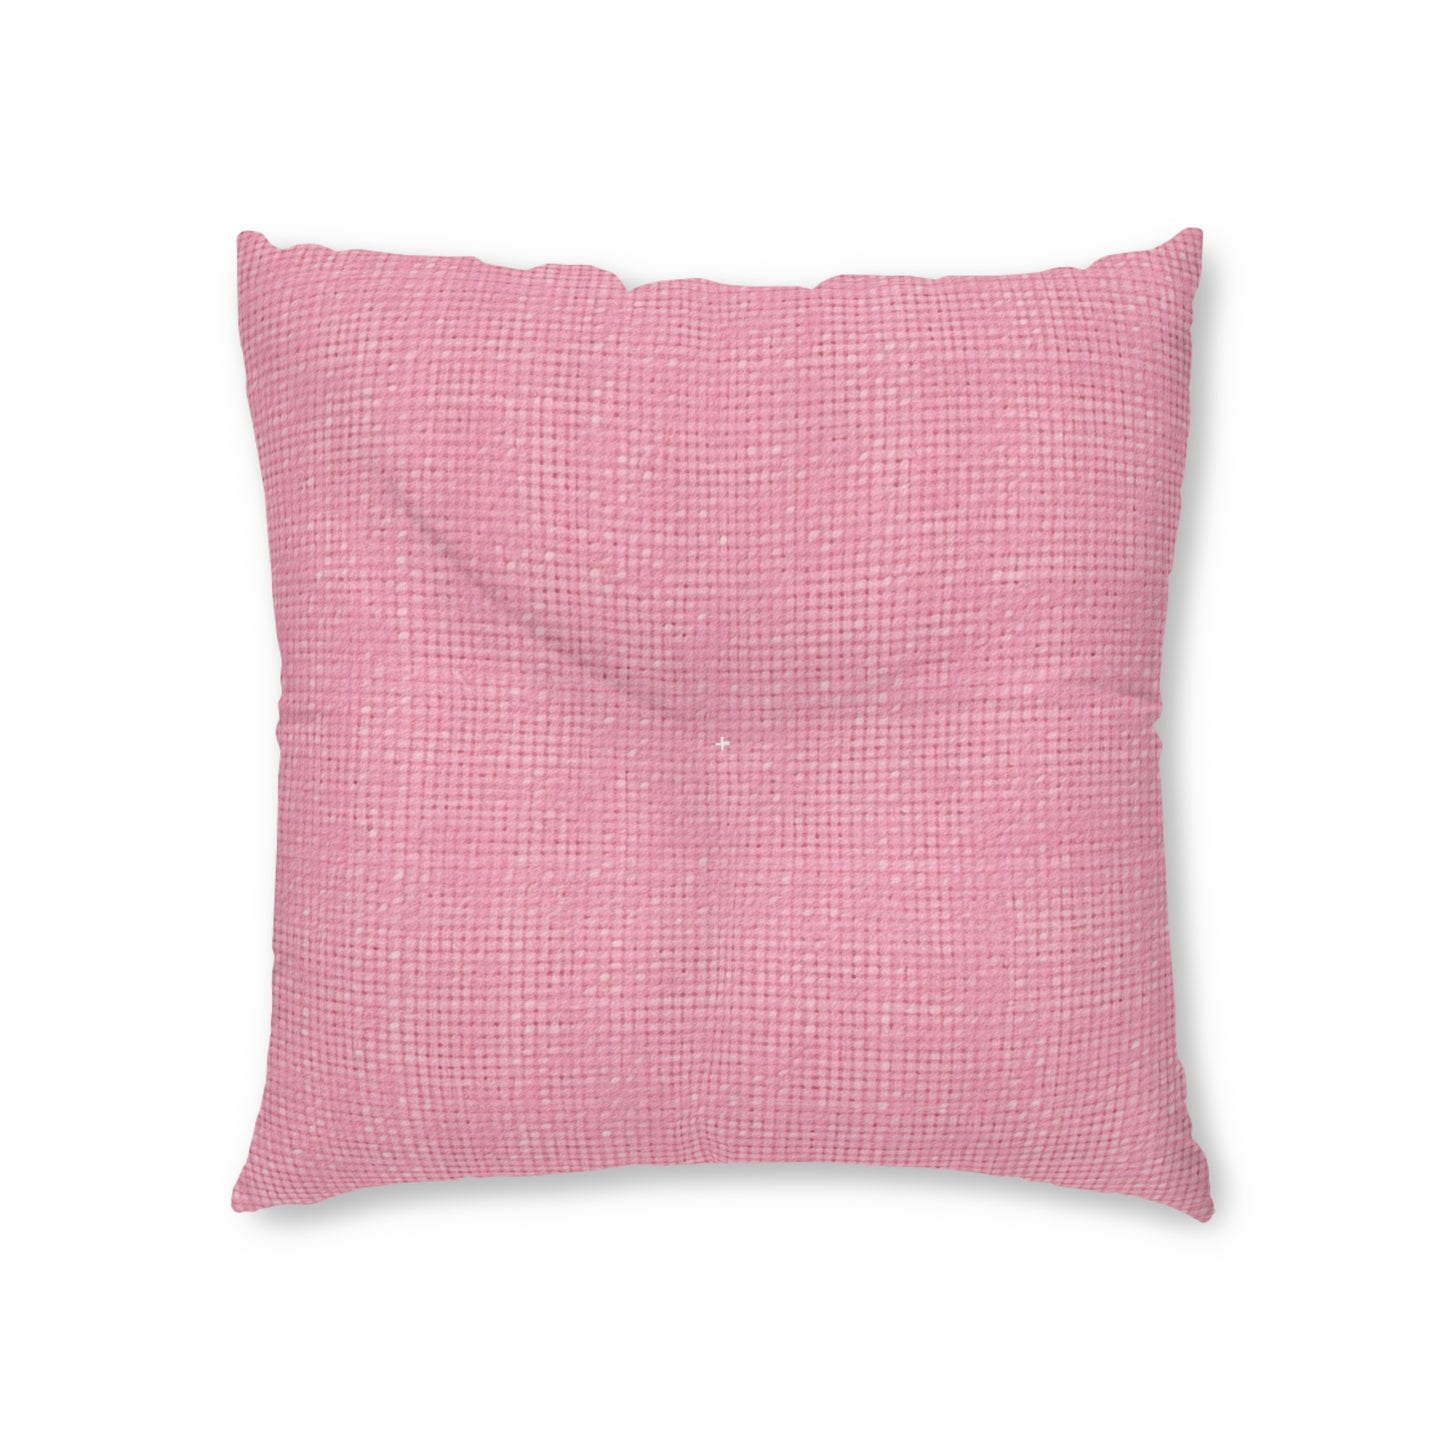 Pastel Rose Pink: Denim-Inspired, Refreshing Fabric Design - Tufted Floor Pillow, Square